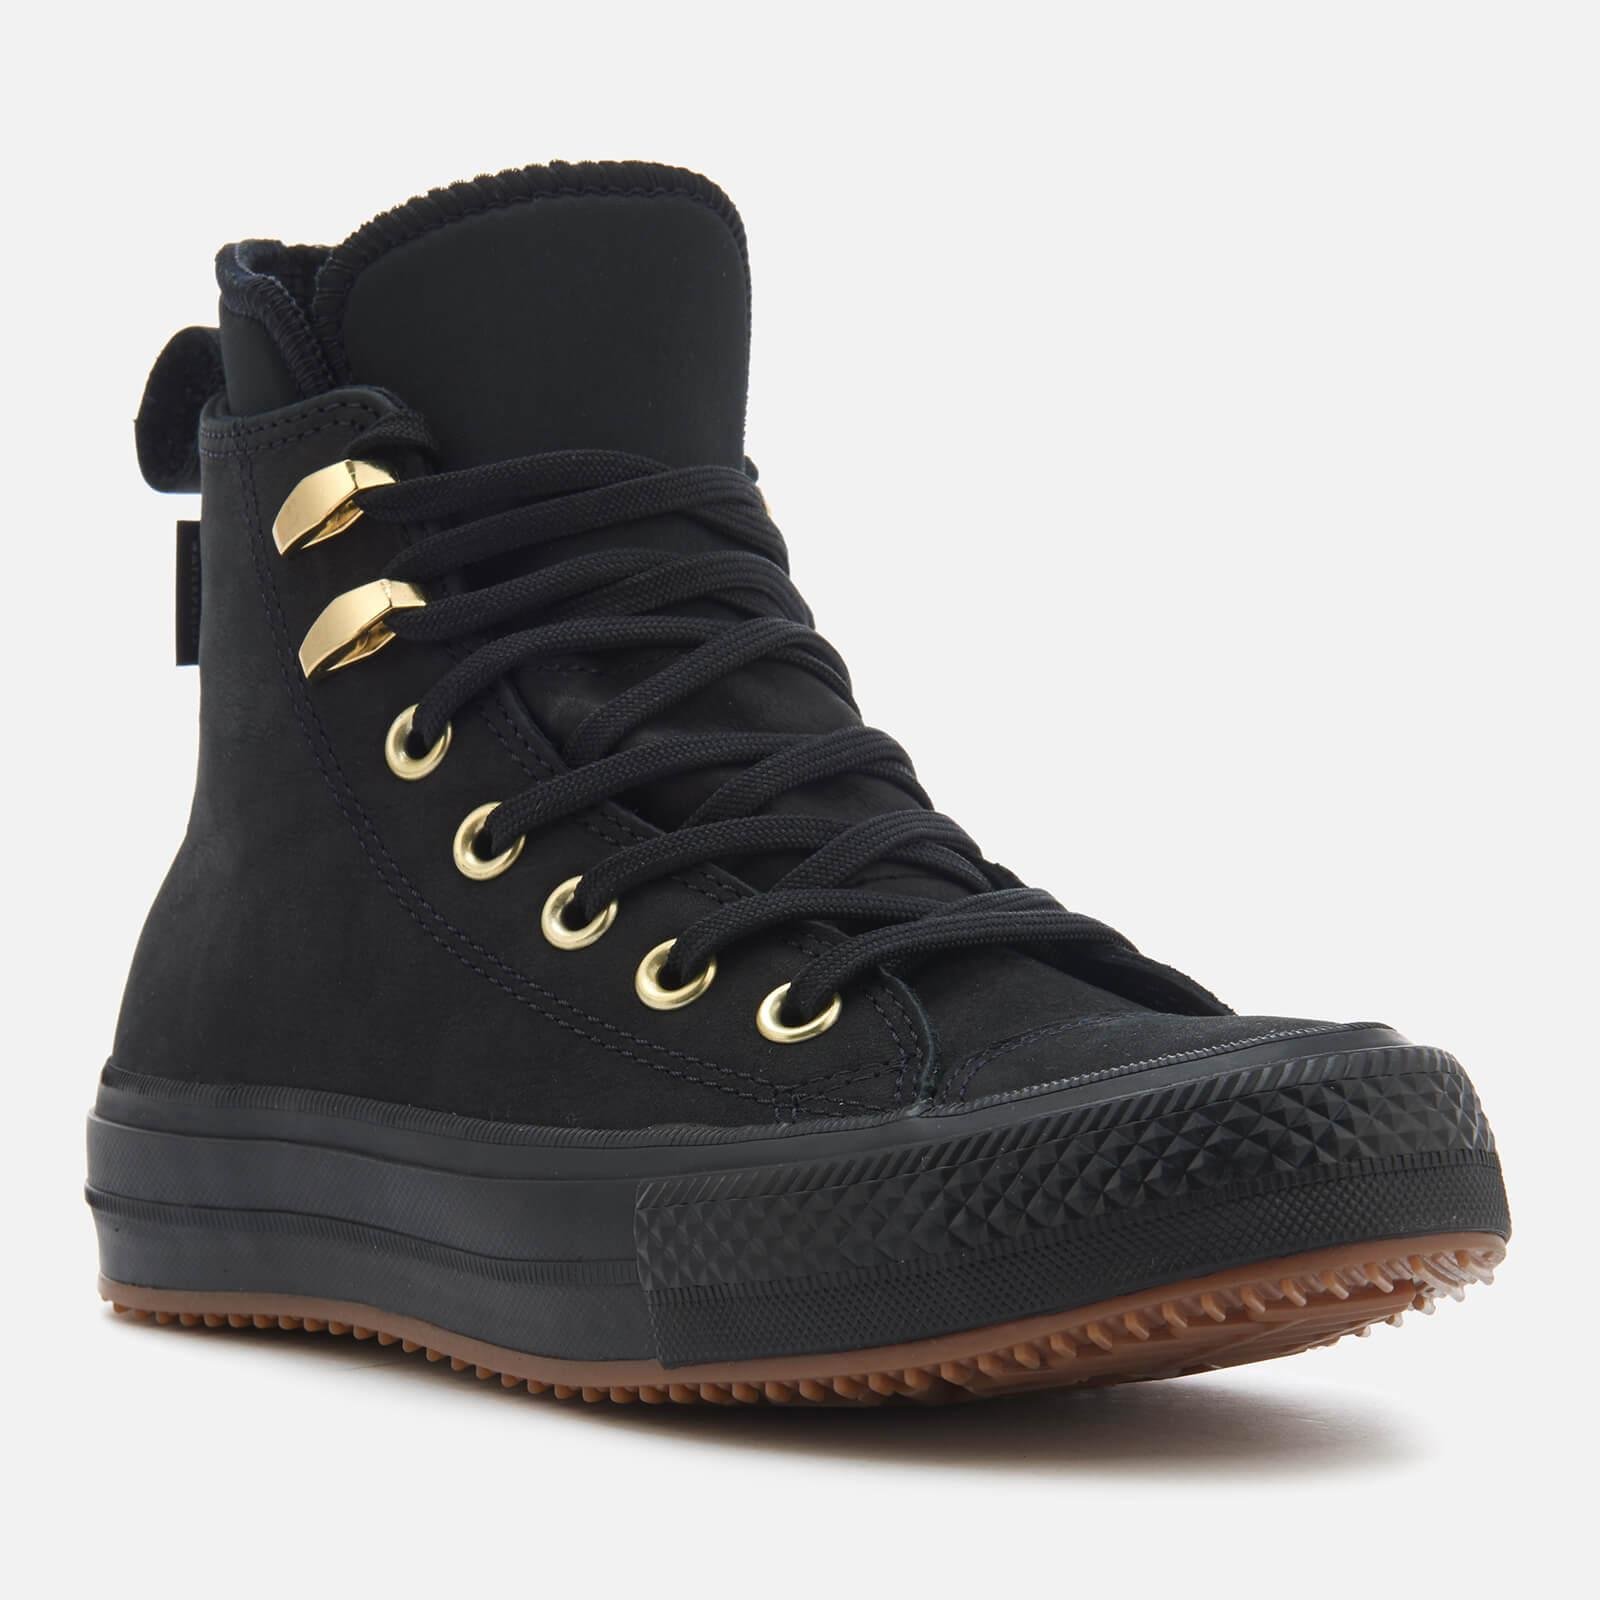 Converse Chuck Taylor All Star Waterproof Boots in Black | Lyst Australia